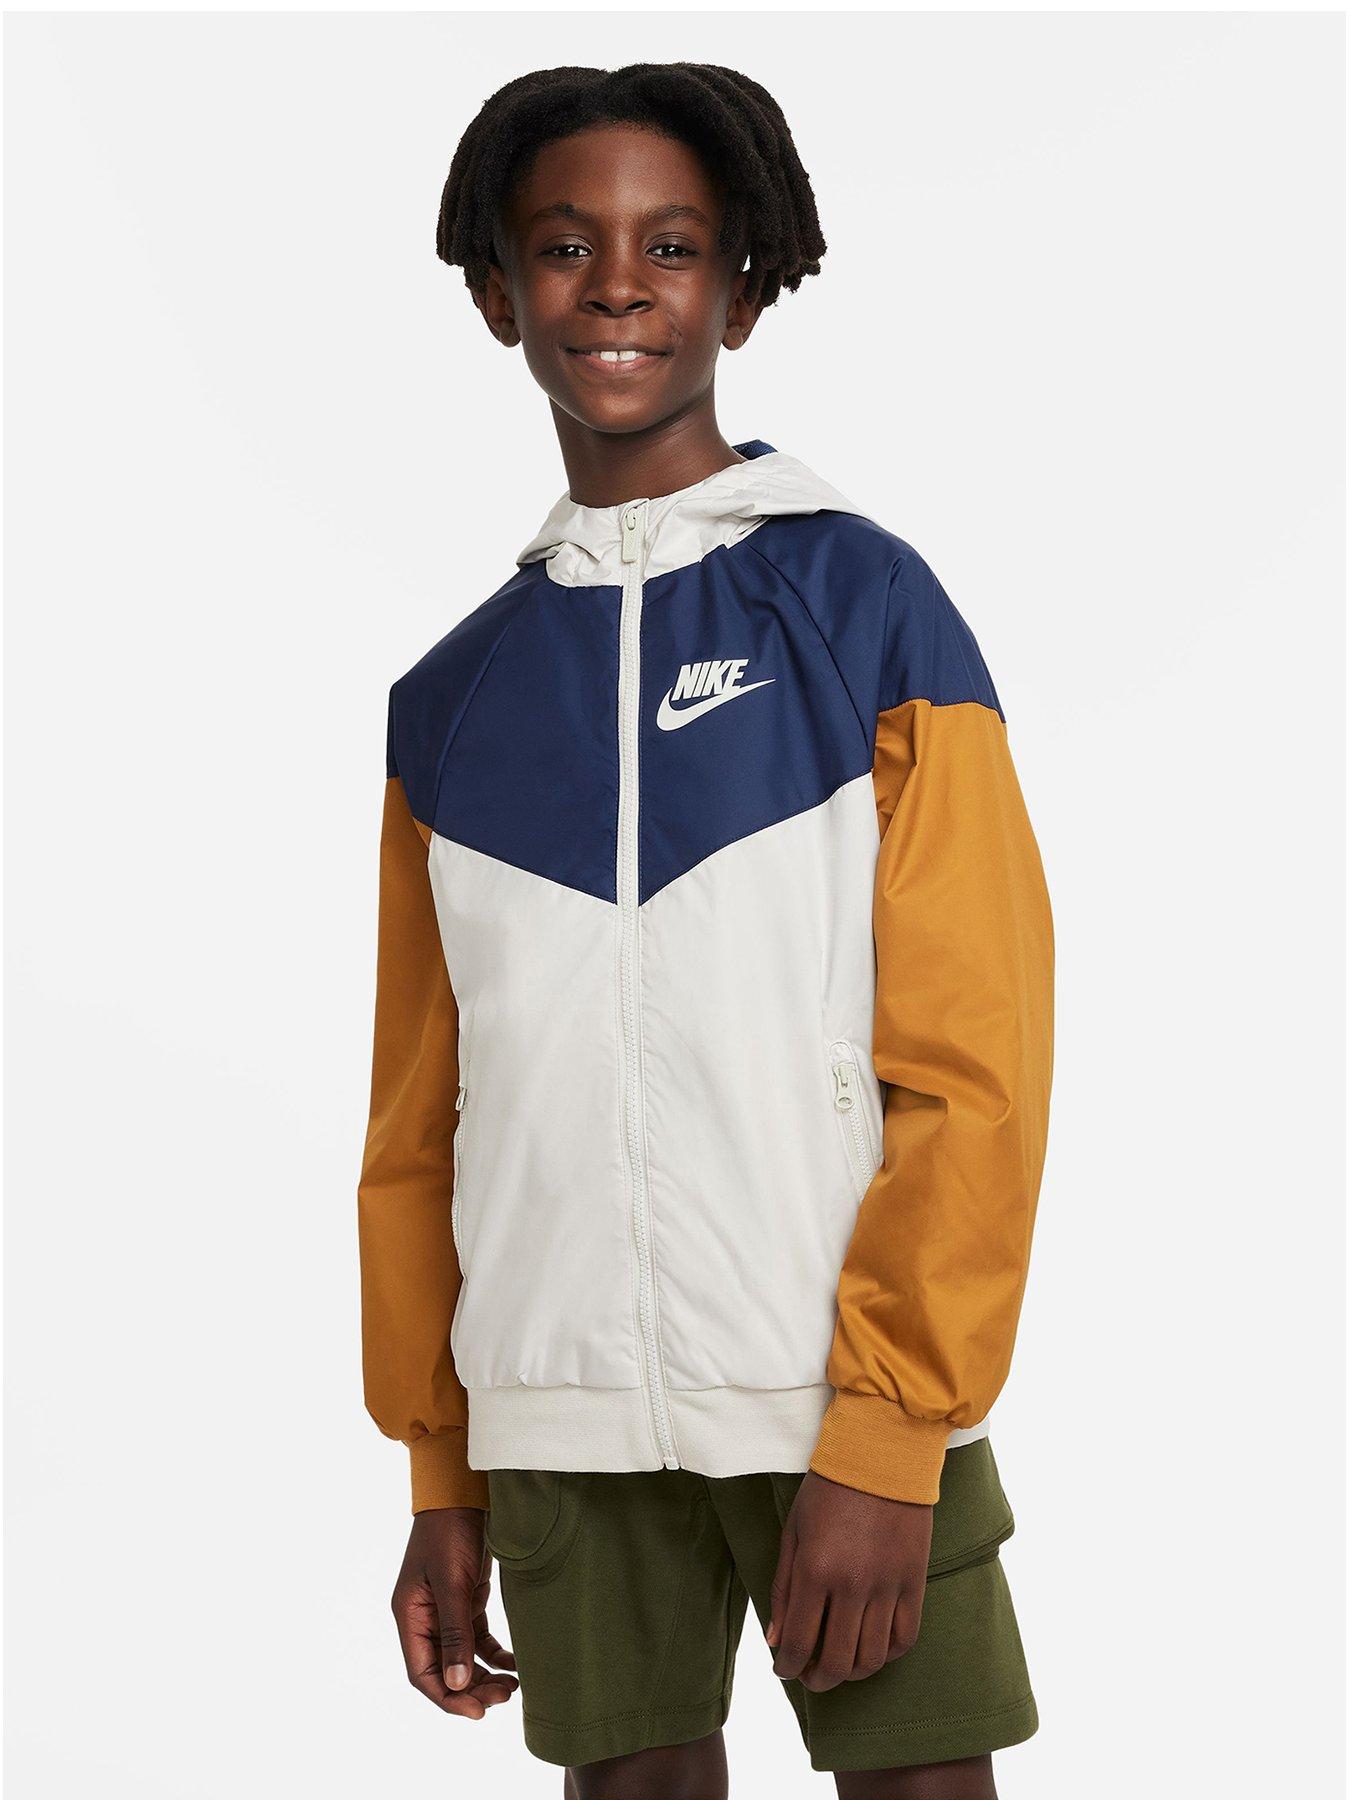 Itaca Espacioso No es suficiente Nike Kids Coats & Jackets | Nike Junior Coat | Very.co.uk